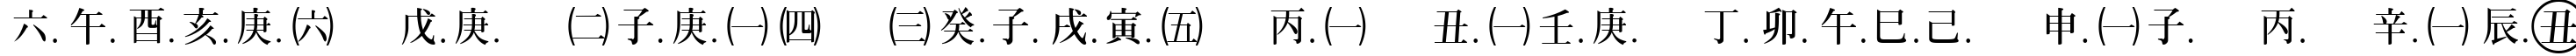 Пример написания шрифтом Chinese Generic1 текста на французском